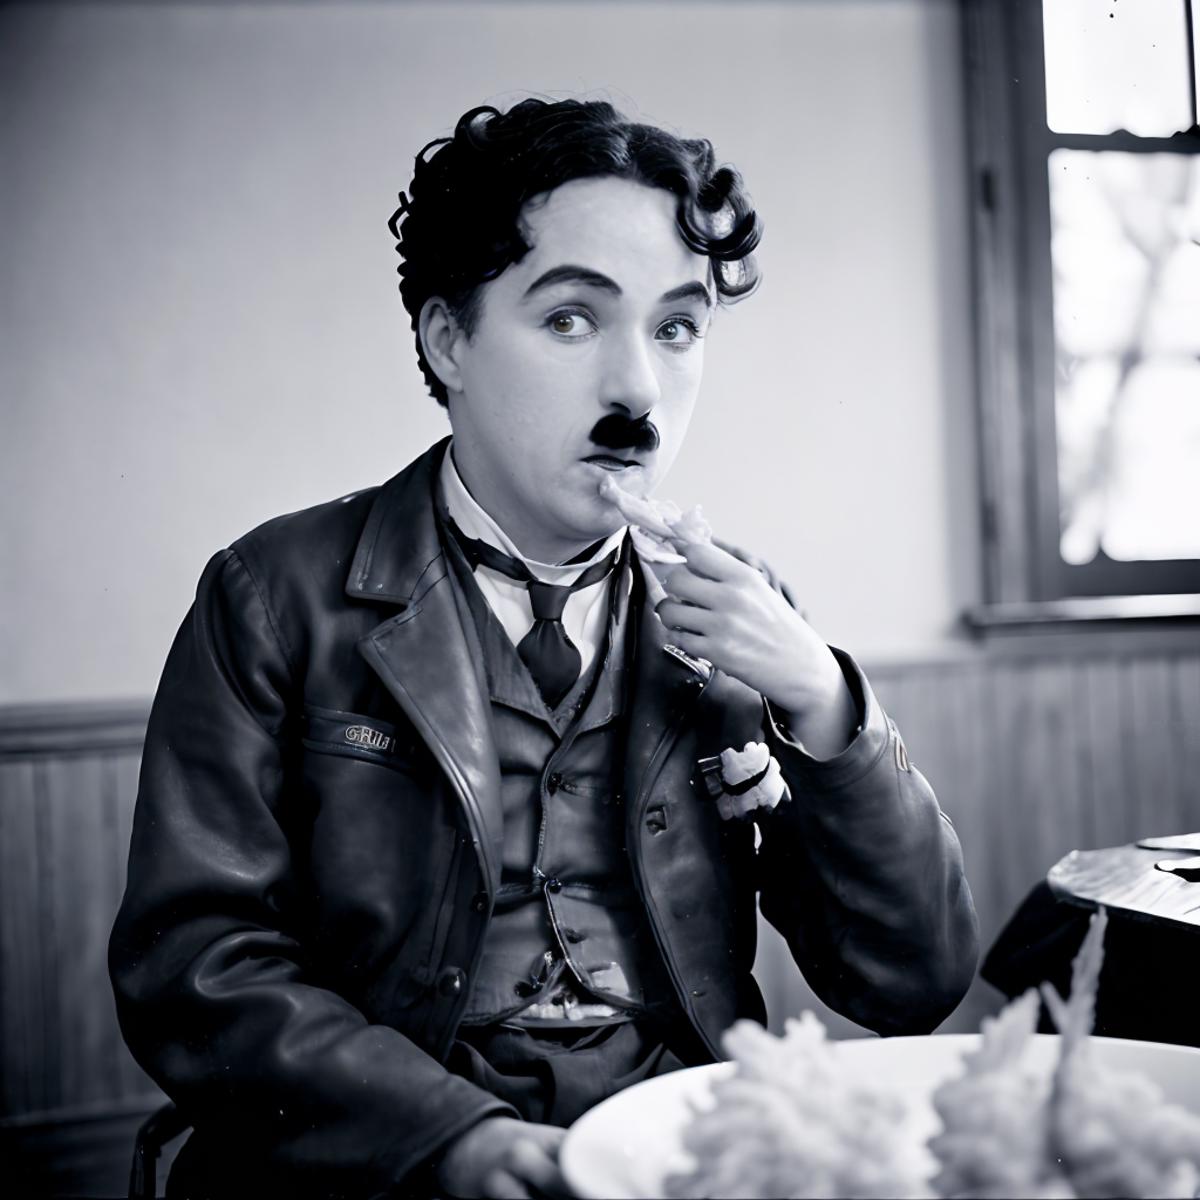 Charlie Chaplin image by ApprenticeSummoner